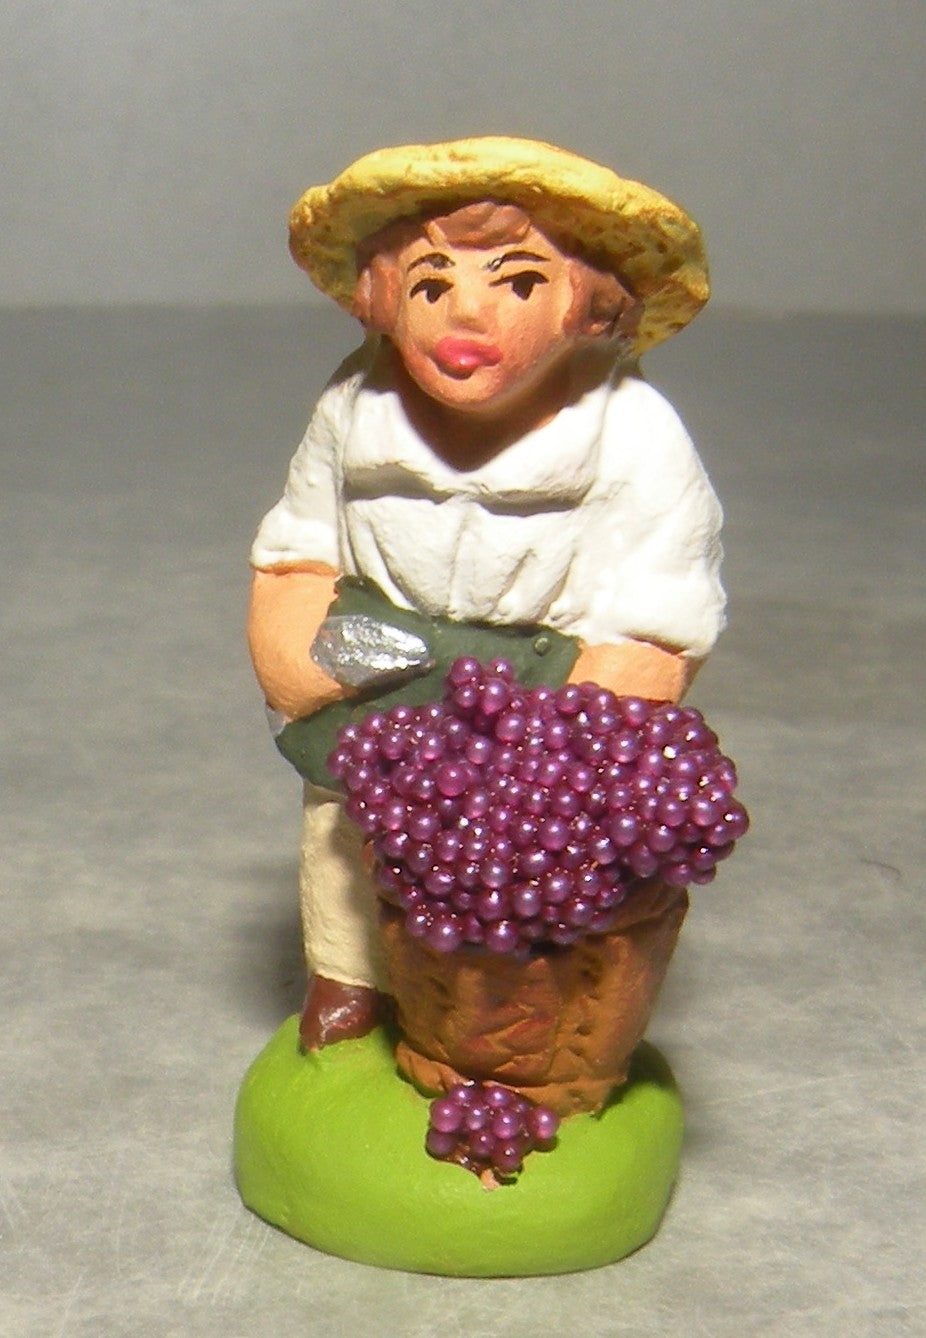 Man harvesting Grapes, Didier Mini